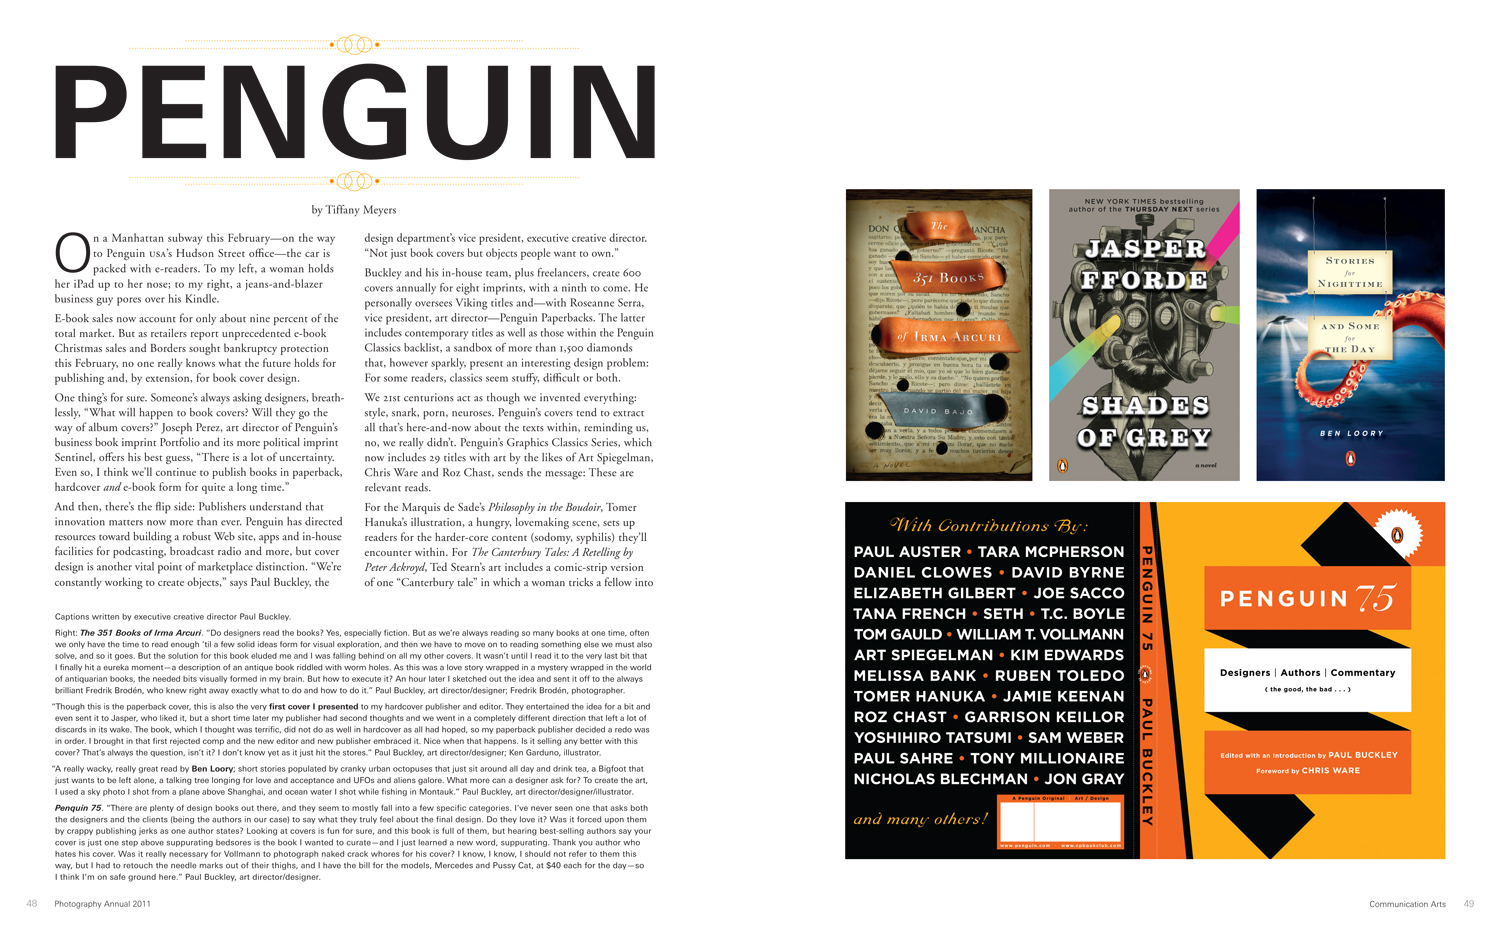 Communication Arts magazine: Penguin Books feature article